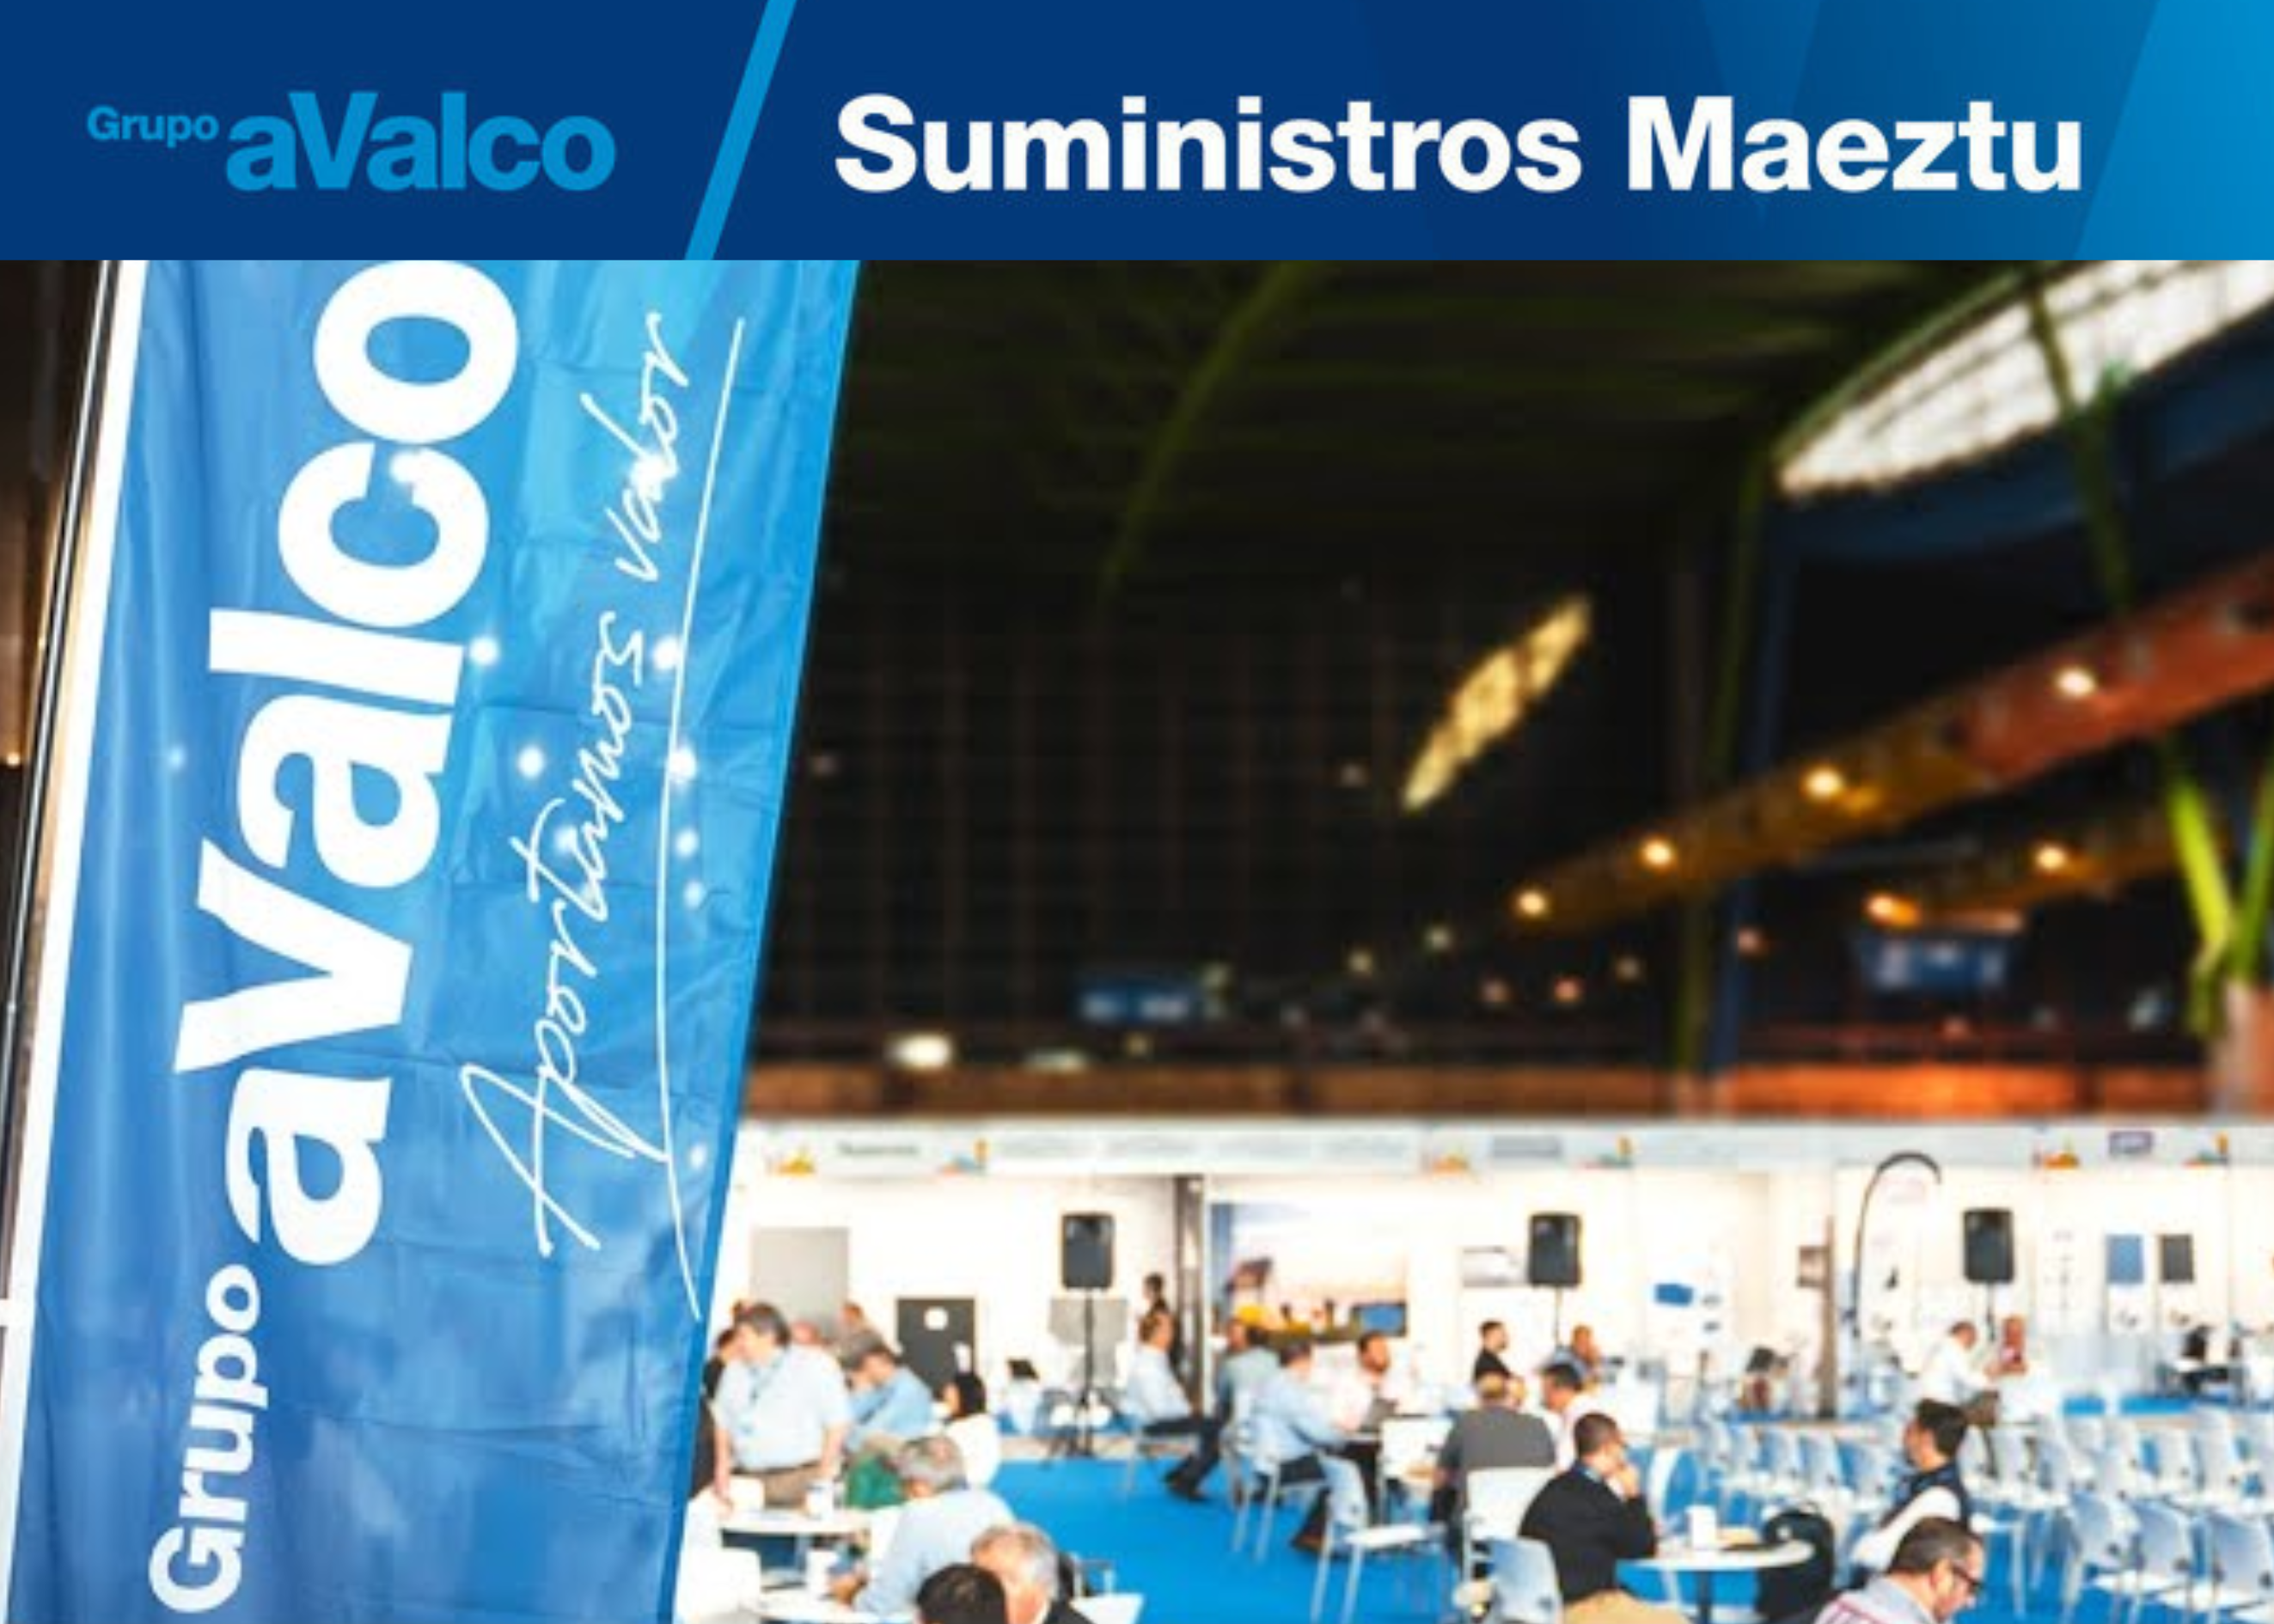 SUMINISTROS MAEZTU Presente en la XI Feria Proveedores – Grupo Avalco